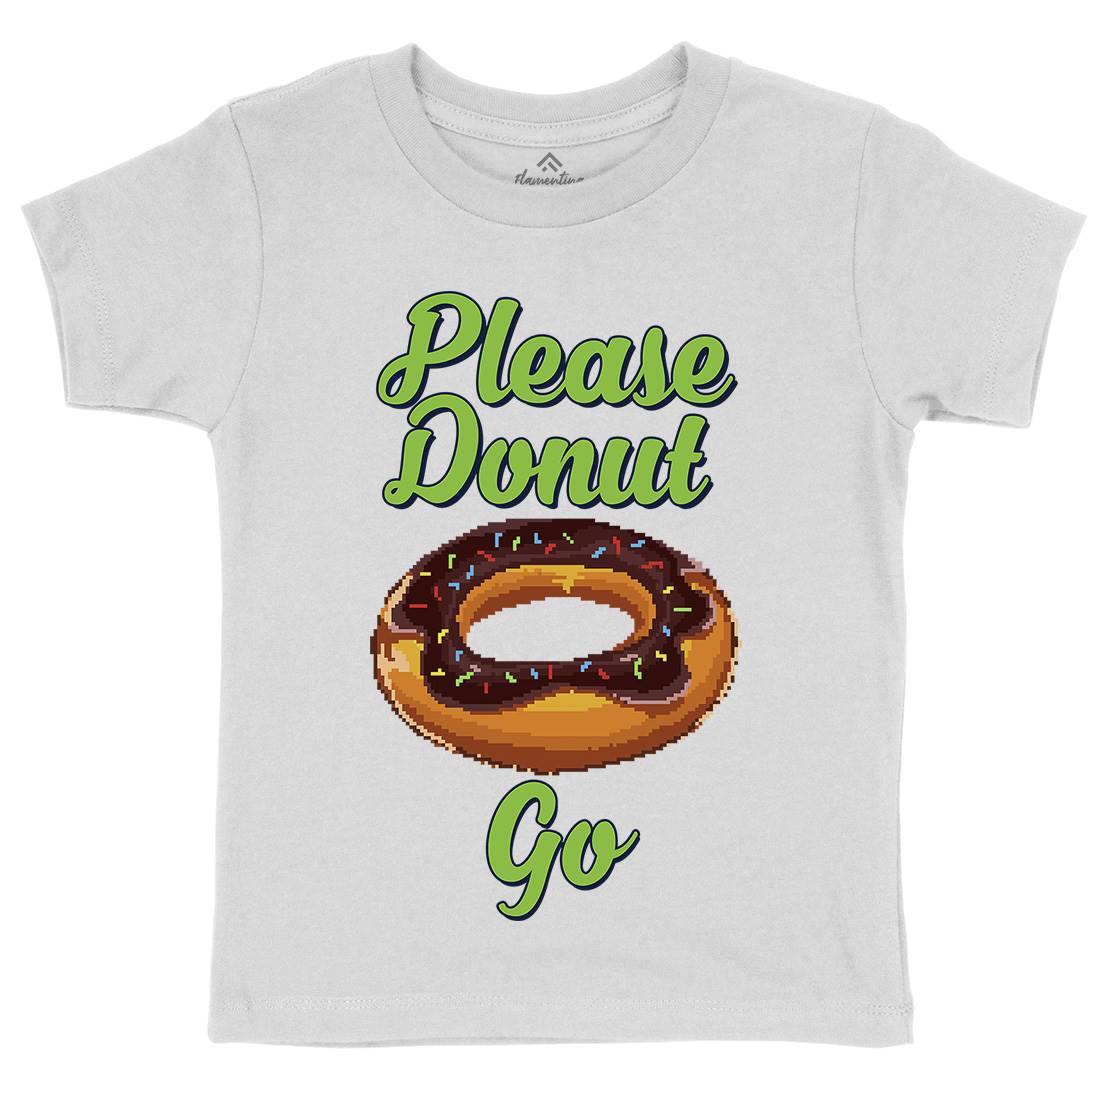 Please Donut Go Food Pun Kids Crew Neck T-Shirt Food B947